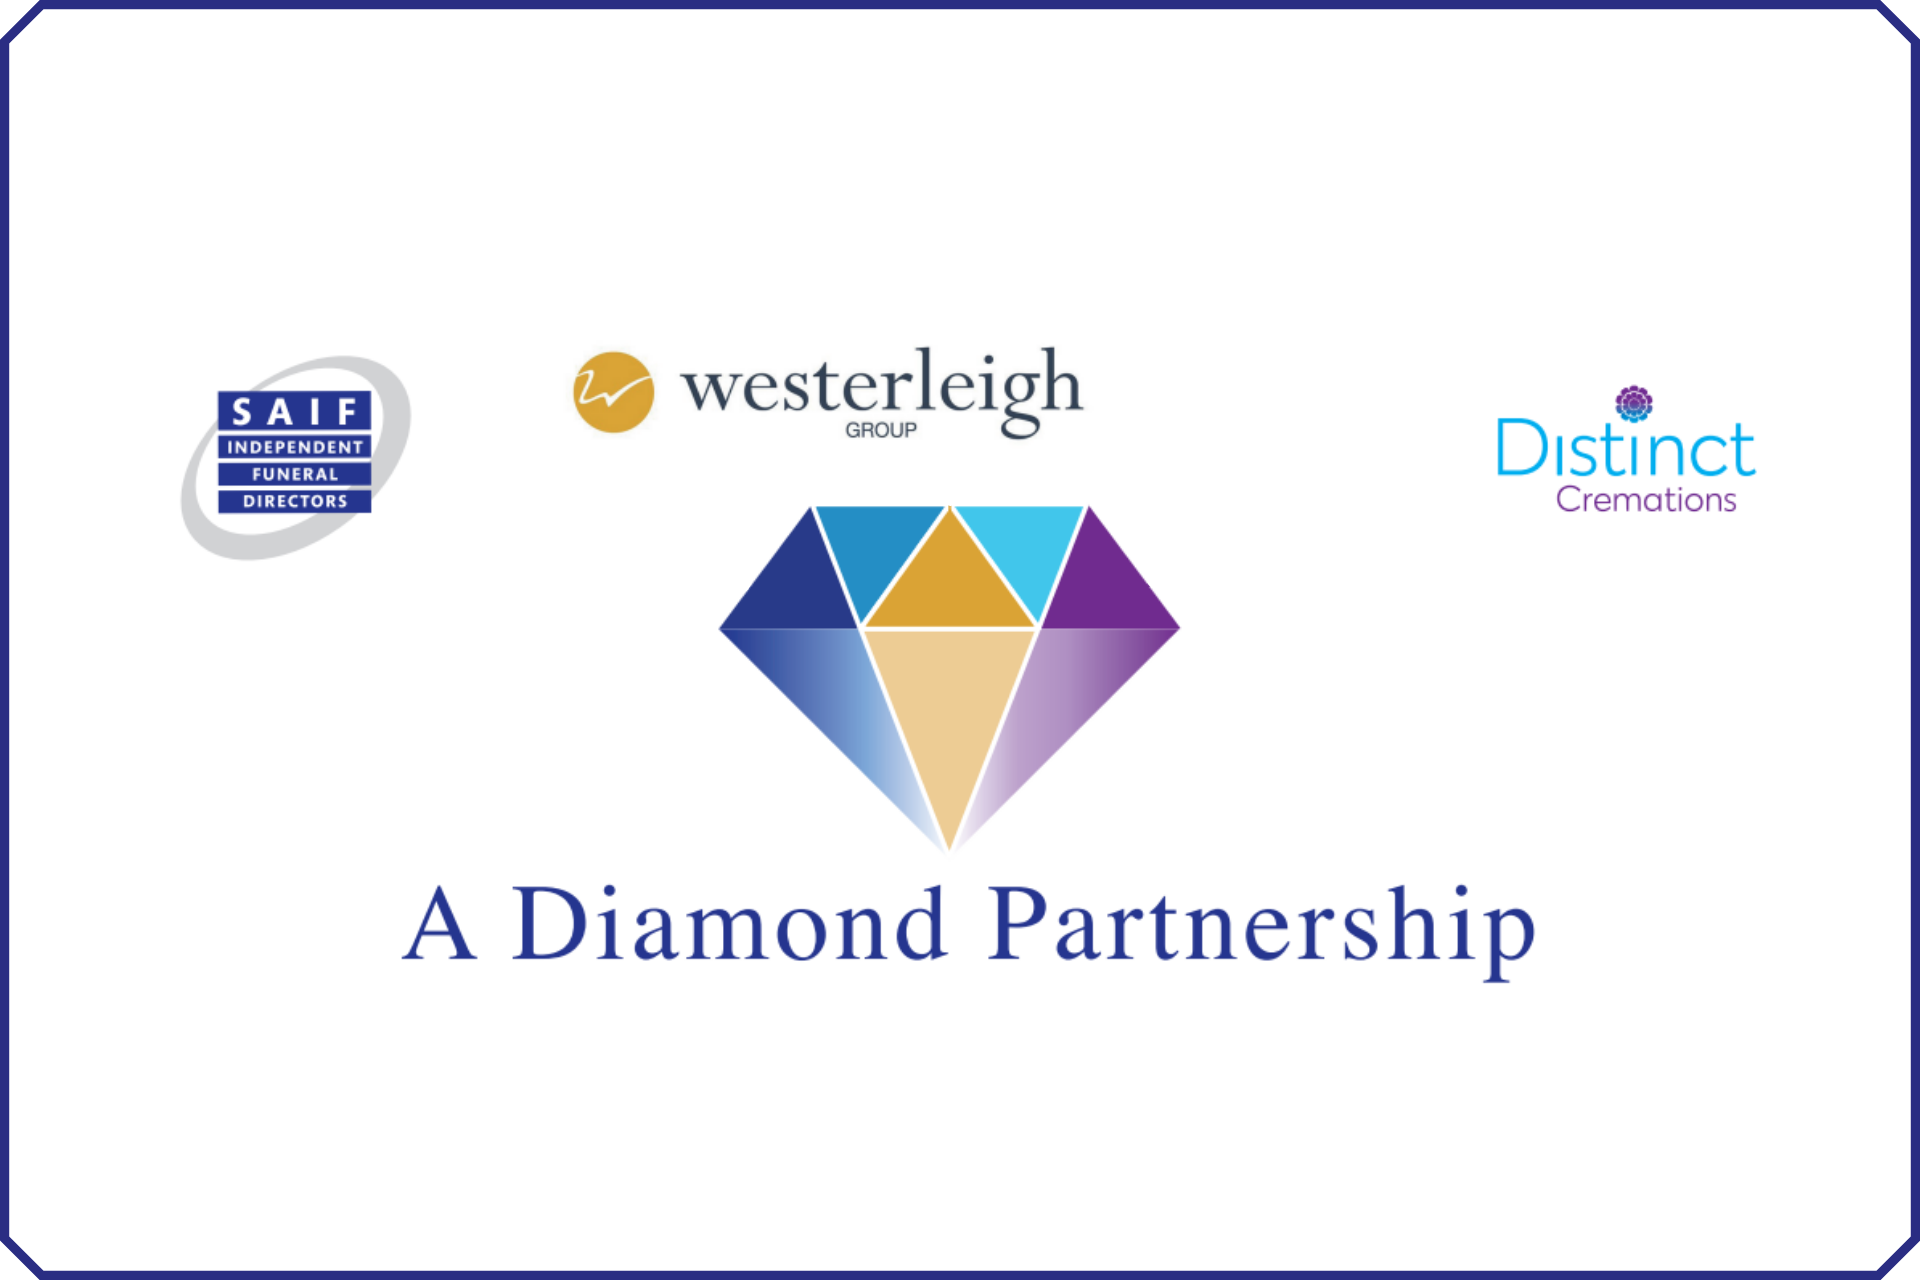 https://saif.org.uk/why-join-saif/diamond-partnership/